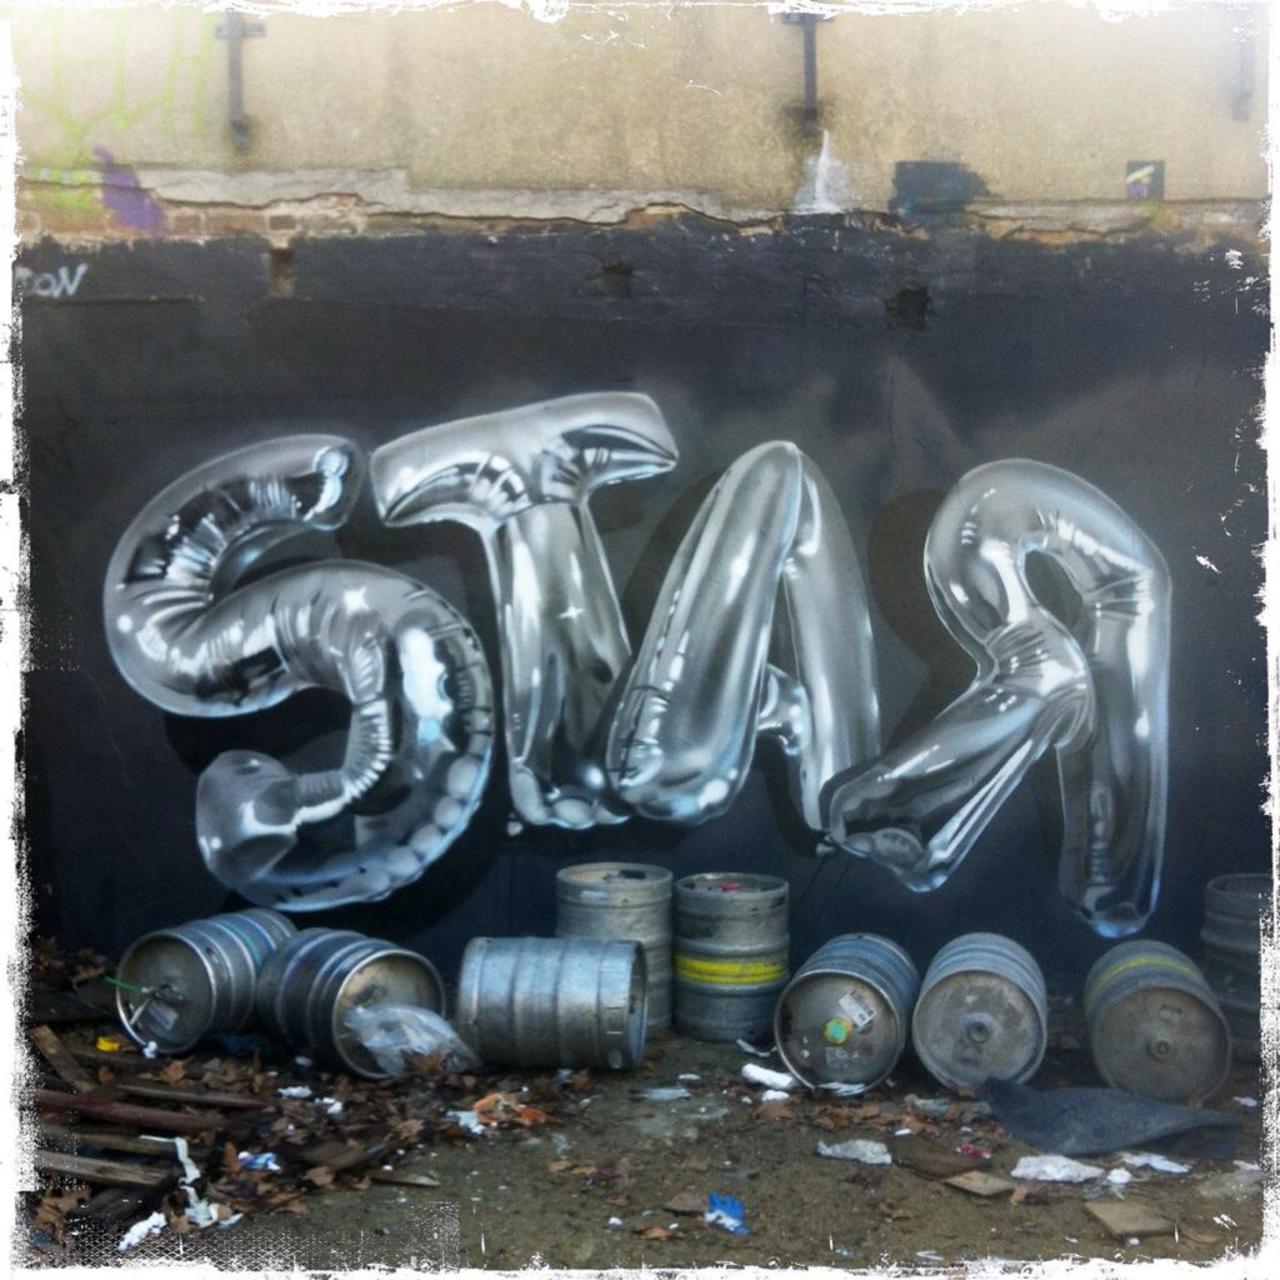 STAR by #Fanakapan 

Brick Lane car park #art #streetart #graffiti @streetart_ldn @ShoreditchGraf http://t.co/r7FAu240AR